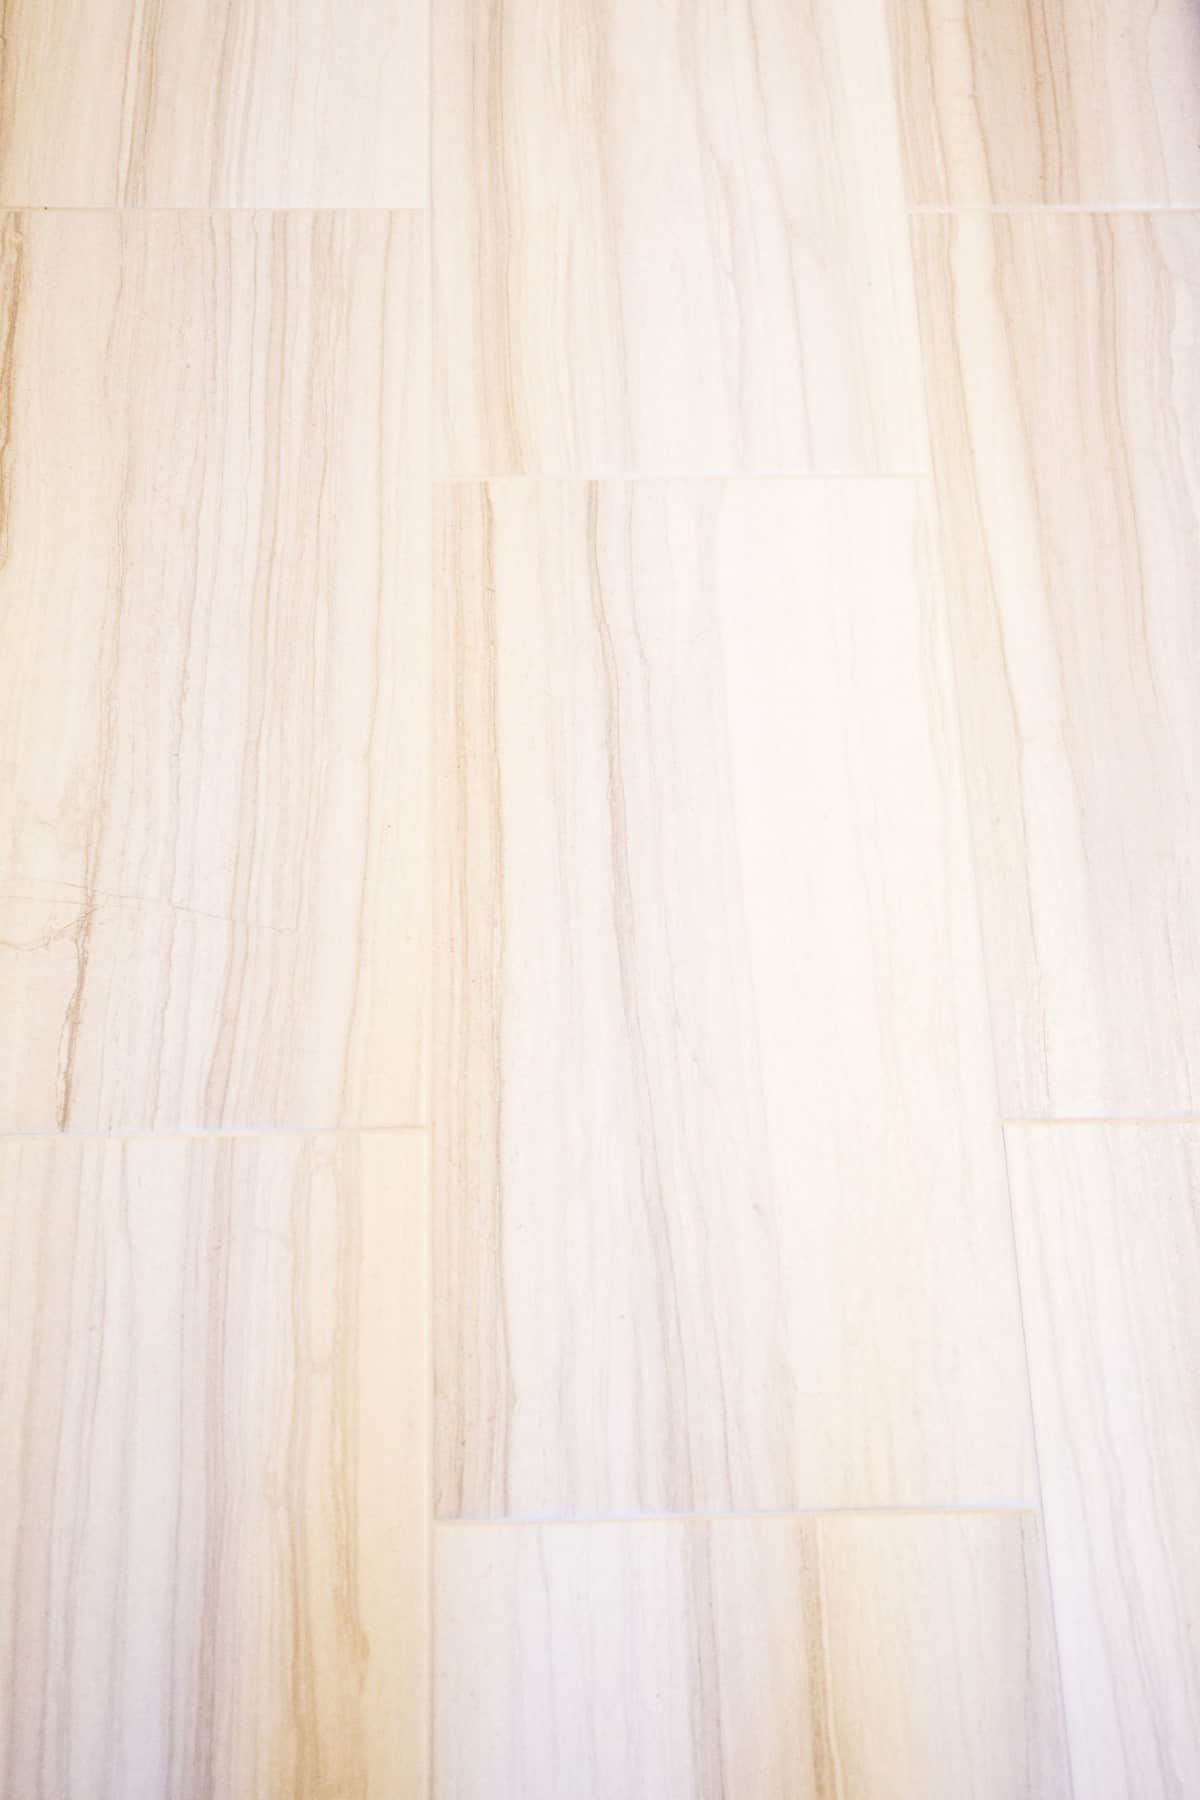 Light Wooden Floor by Hansman Custom Homes in Mid-MO